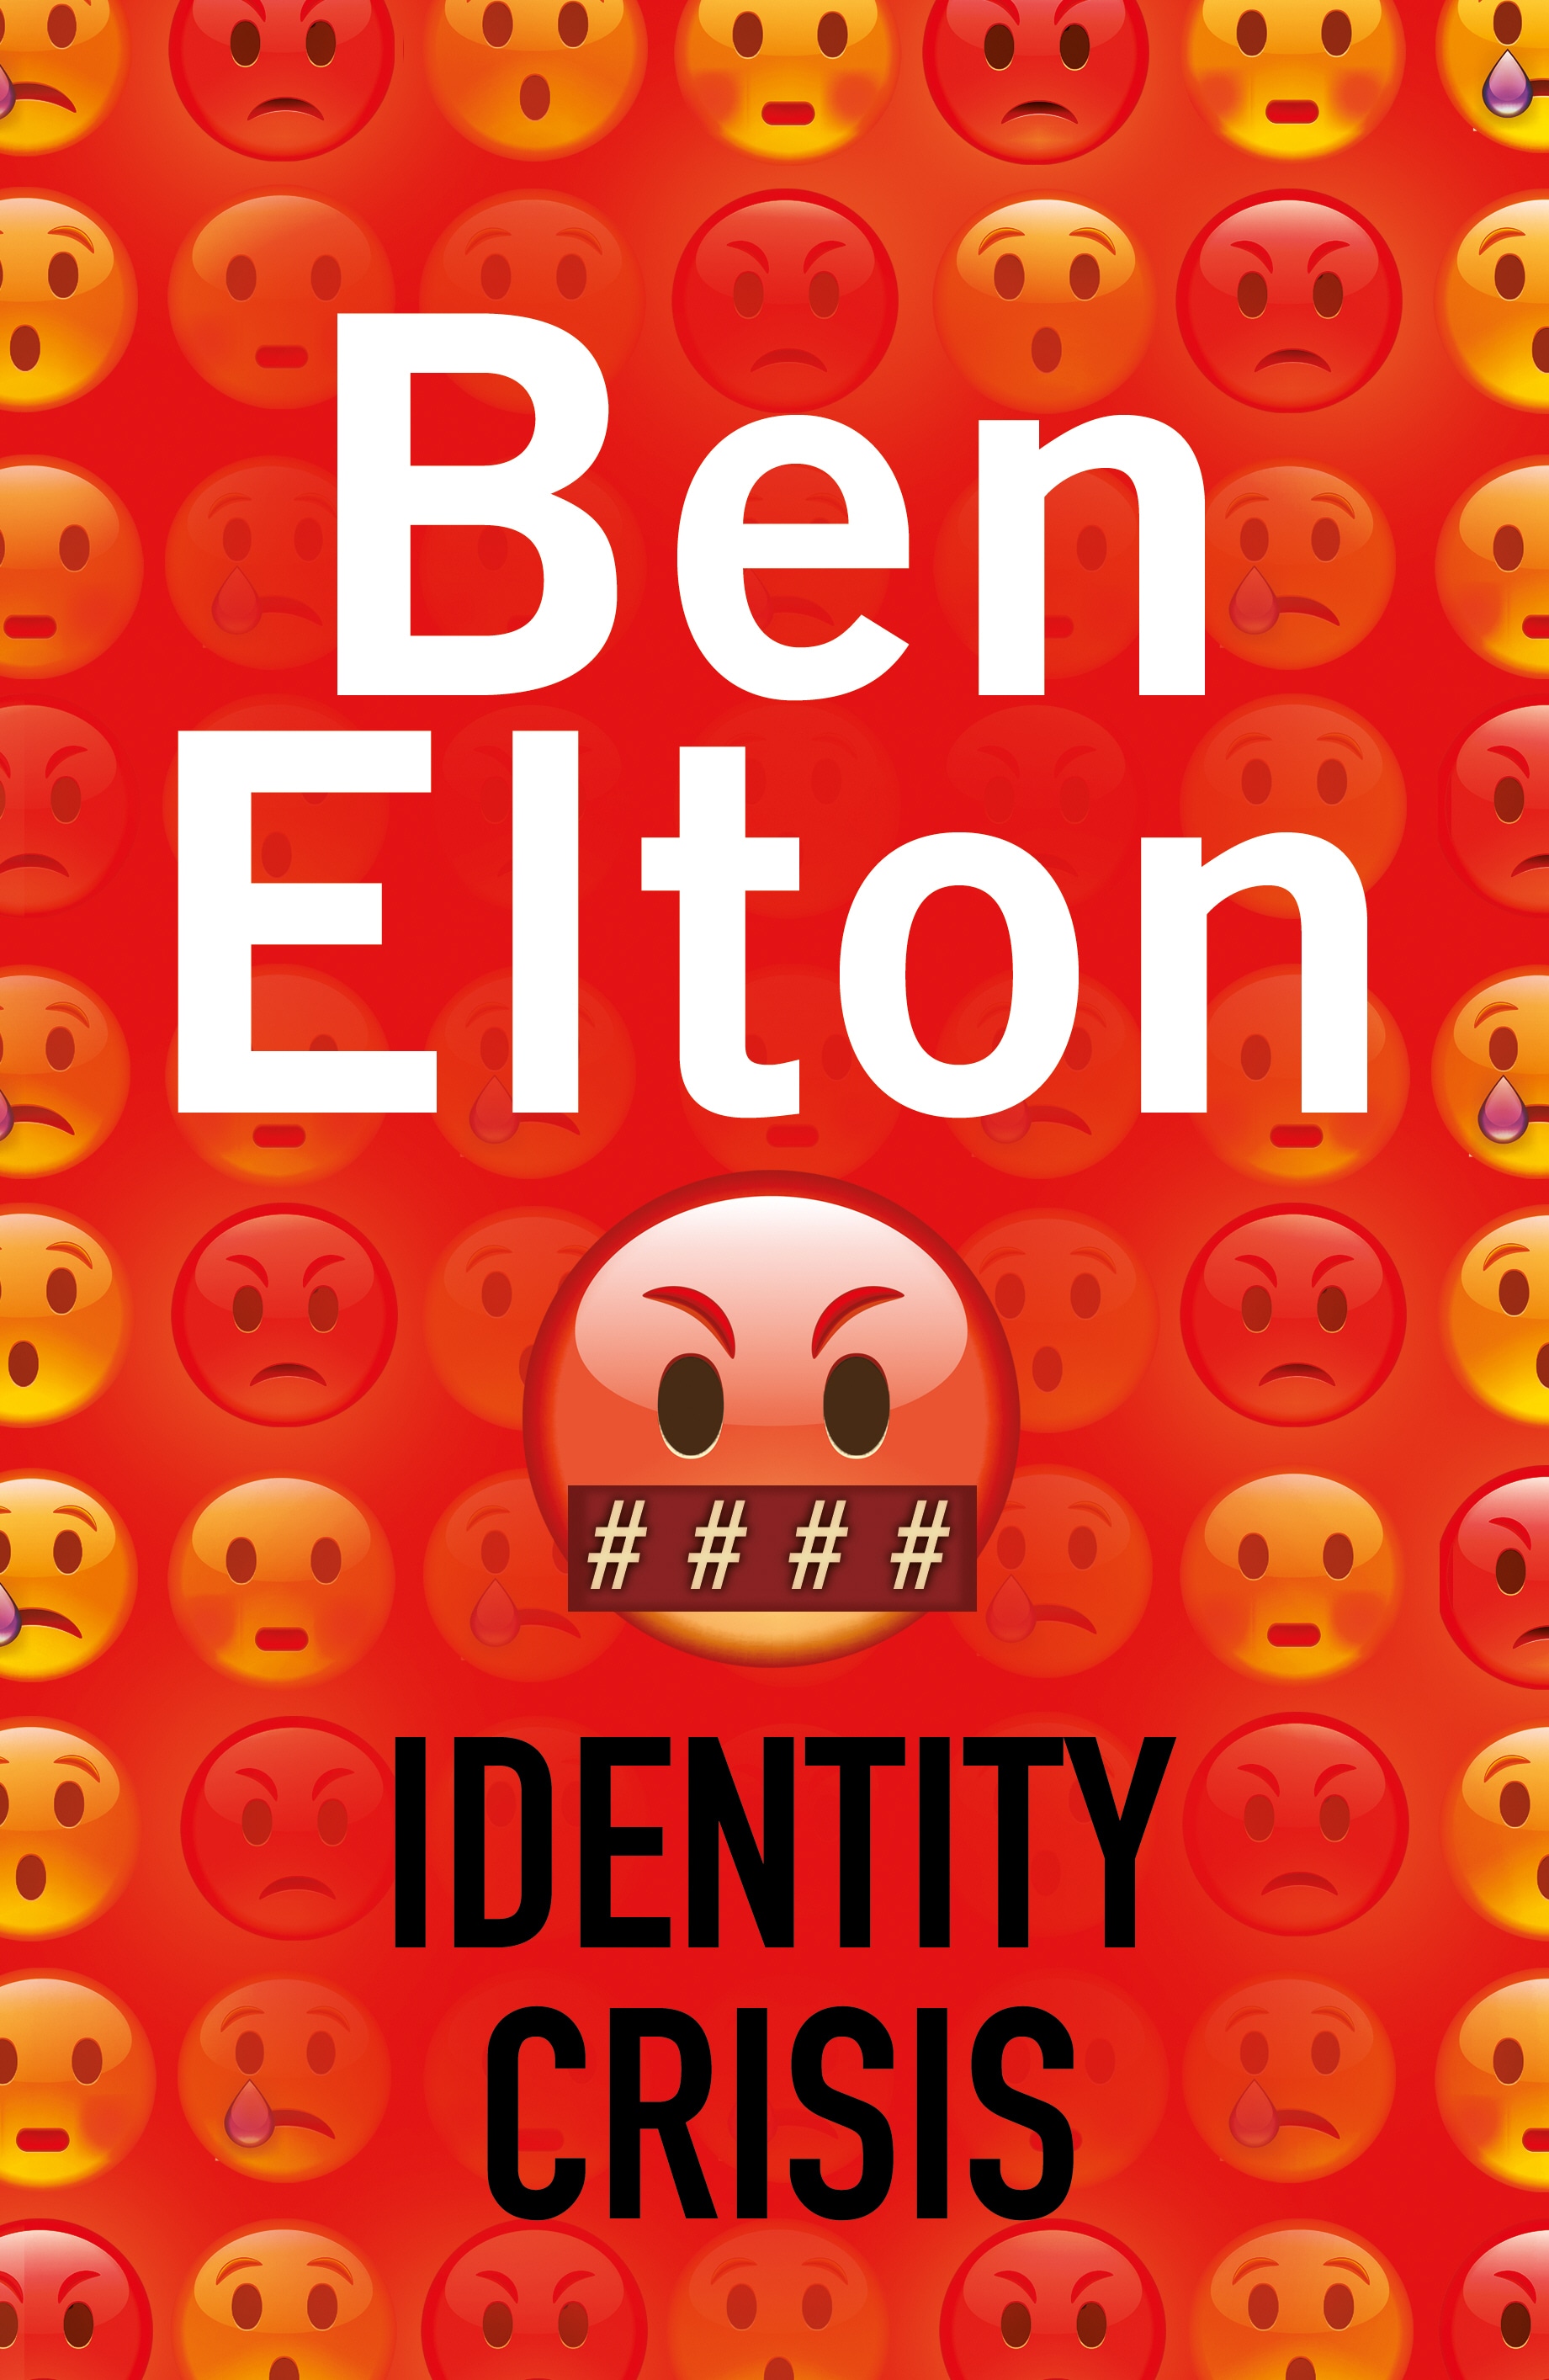 Book “Identity Crisis” by Ben Elton — August 8, 2019